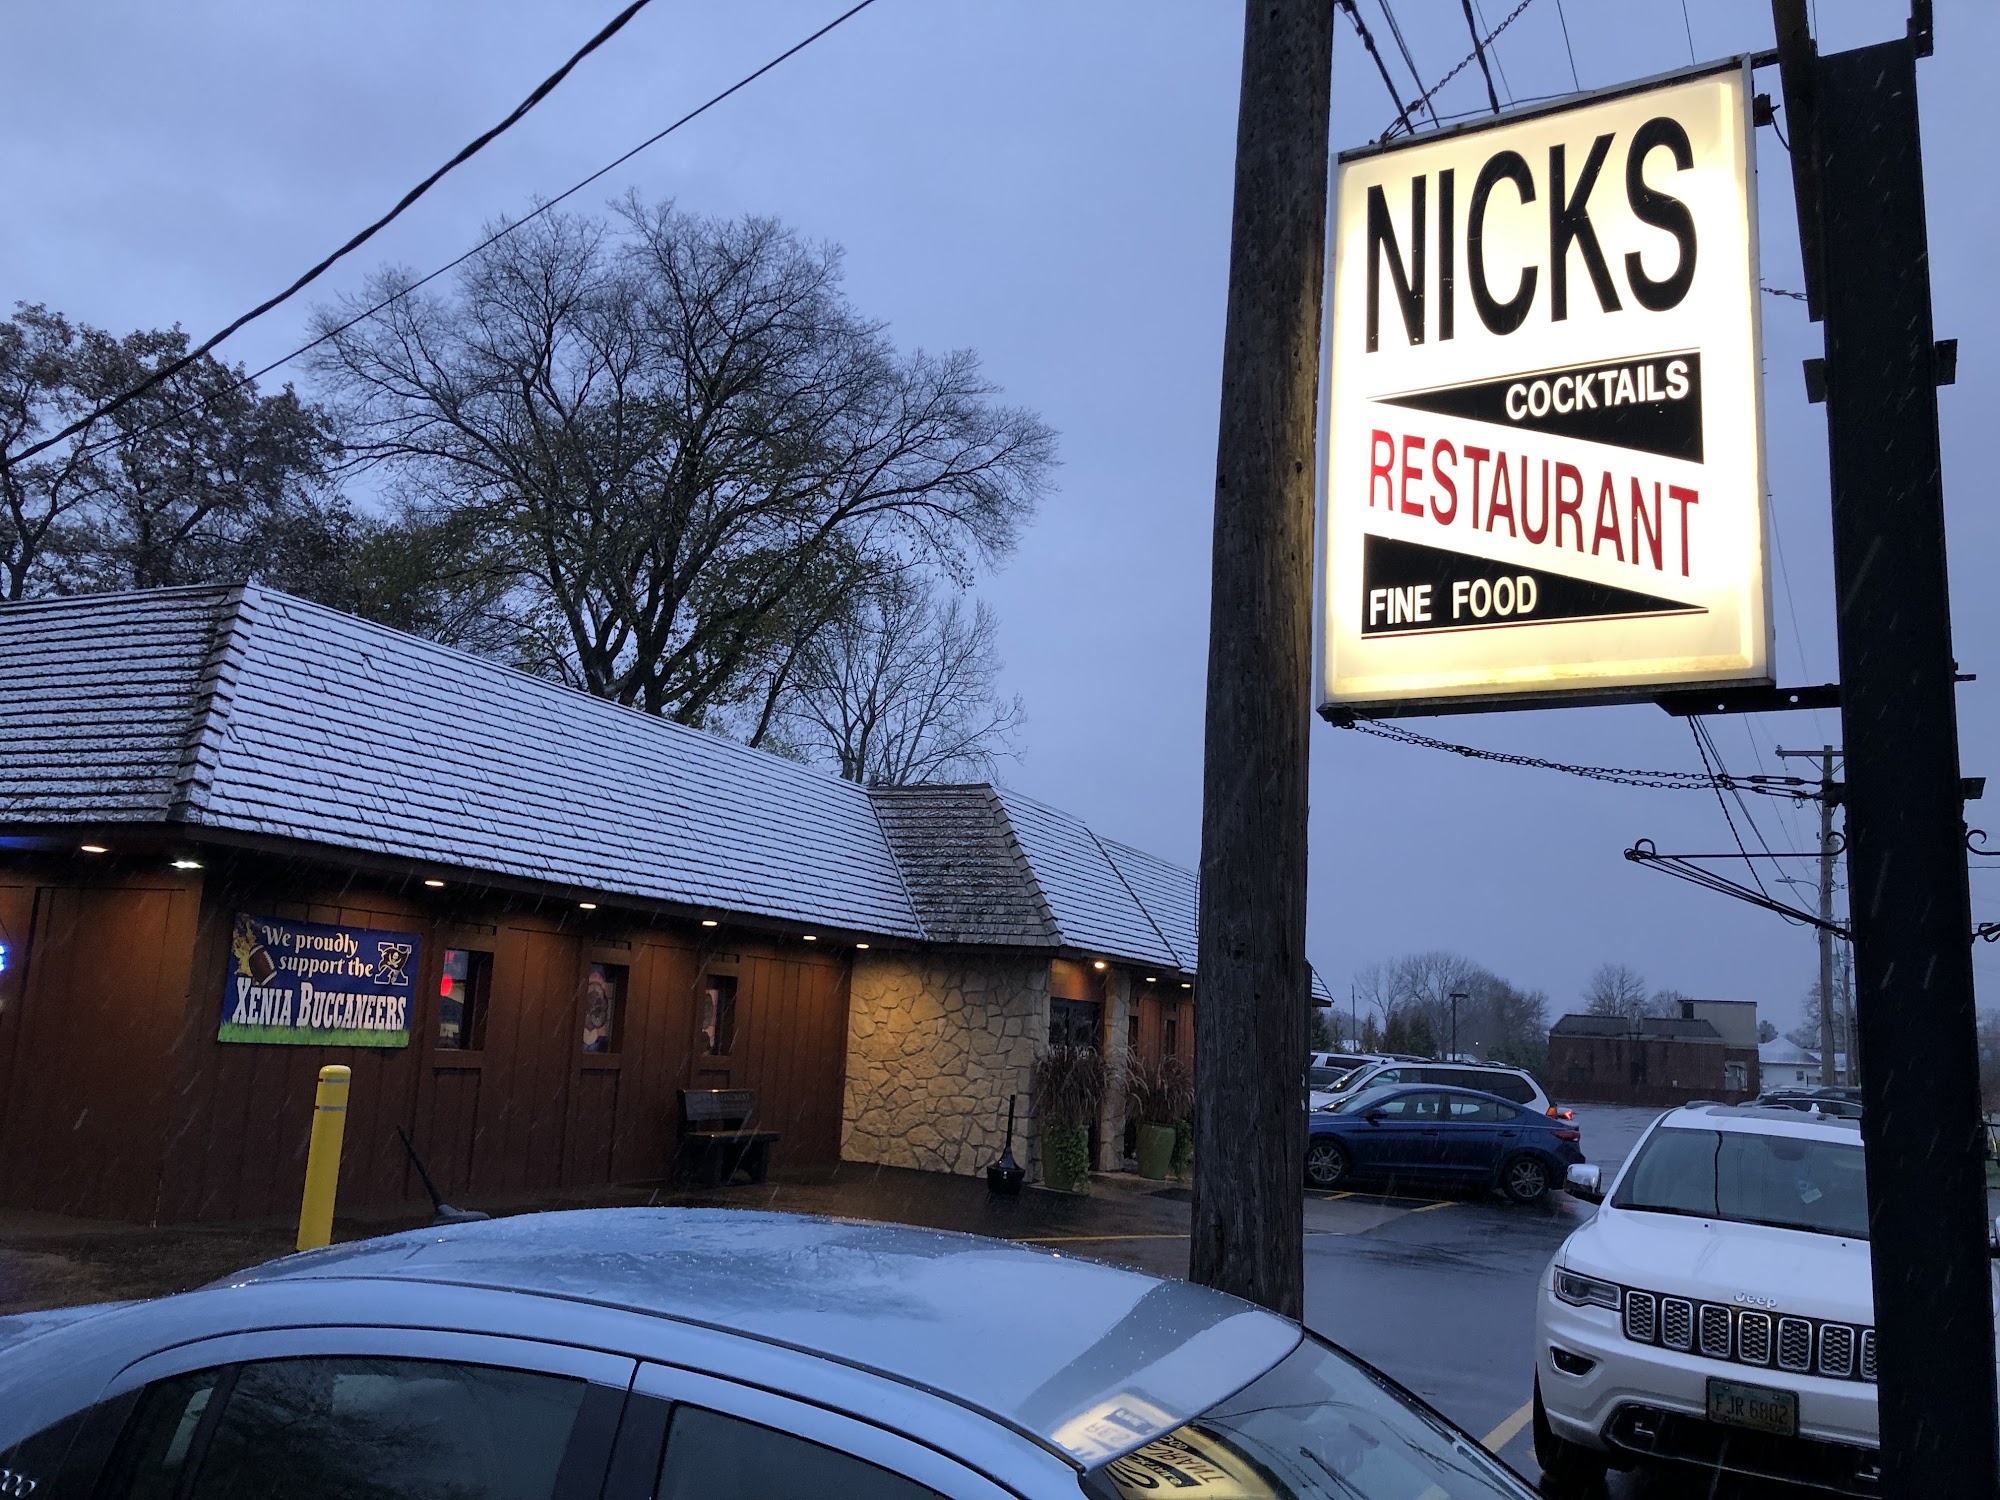 Nick's Restaurant